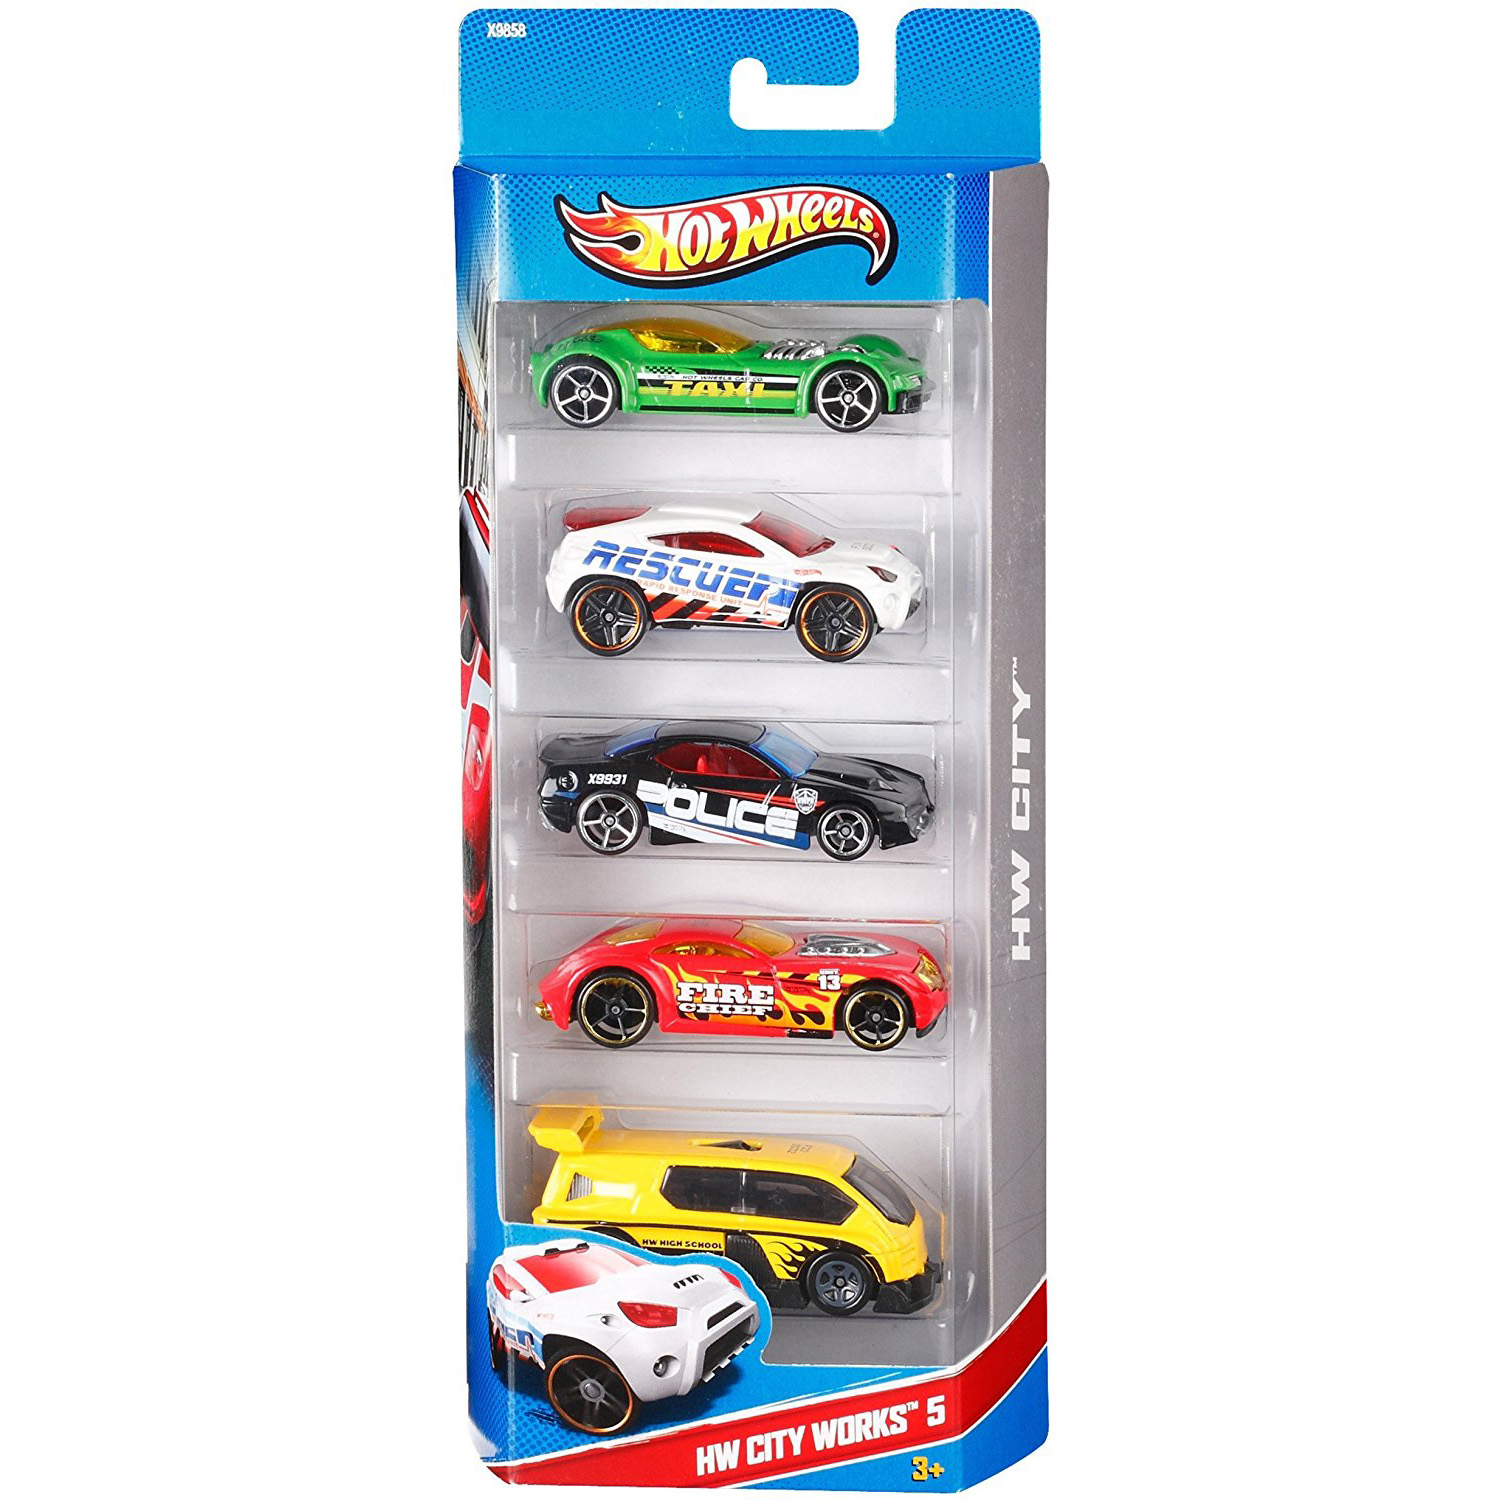 Hot Wheels 5 Race Car T Pack Assorted Vehicle Racing Set Mattel 1806 Ebay 6760